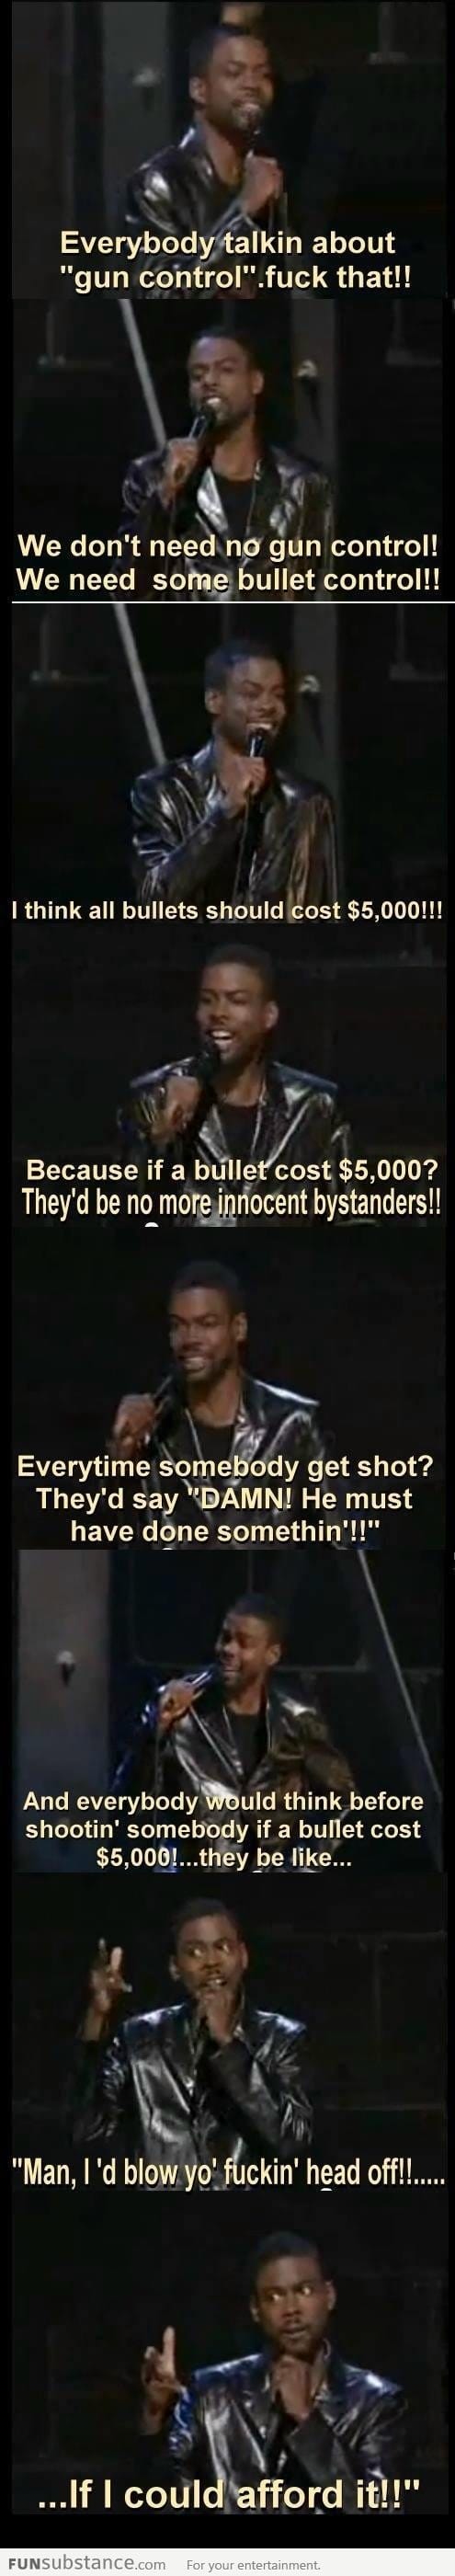 Chris Rock on Gun Control